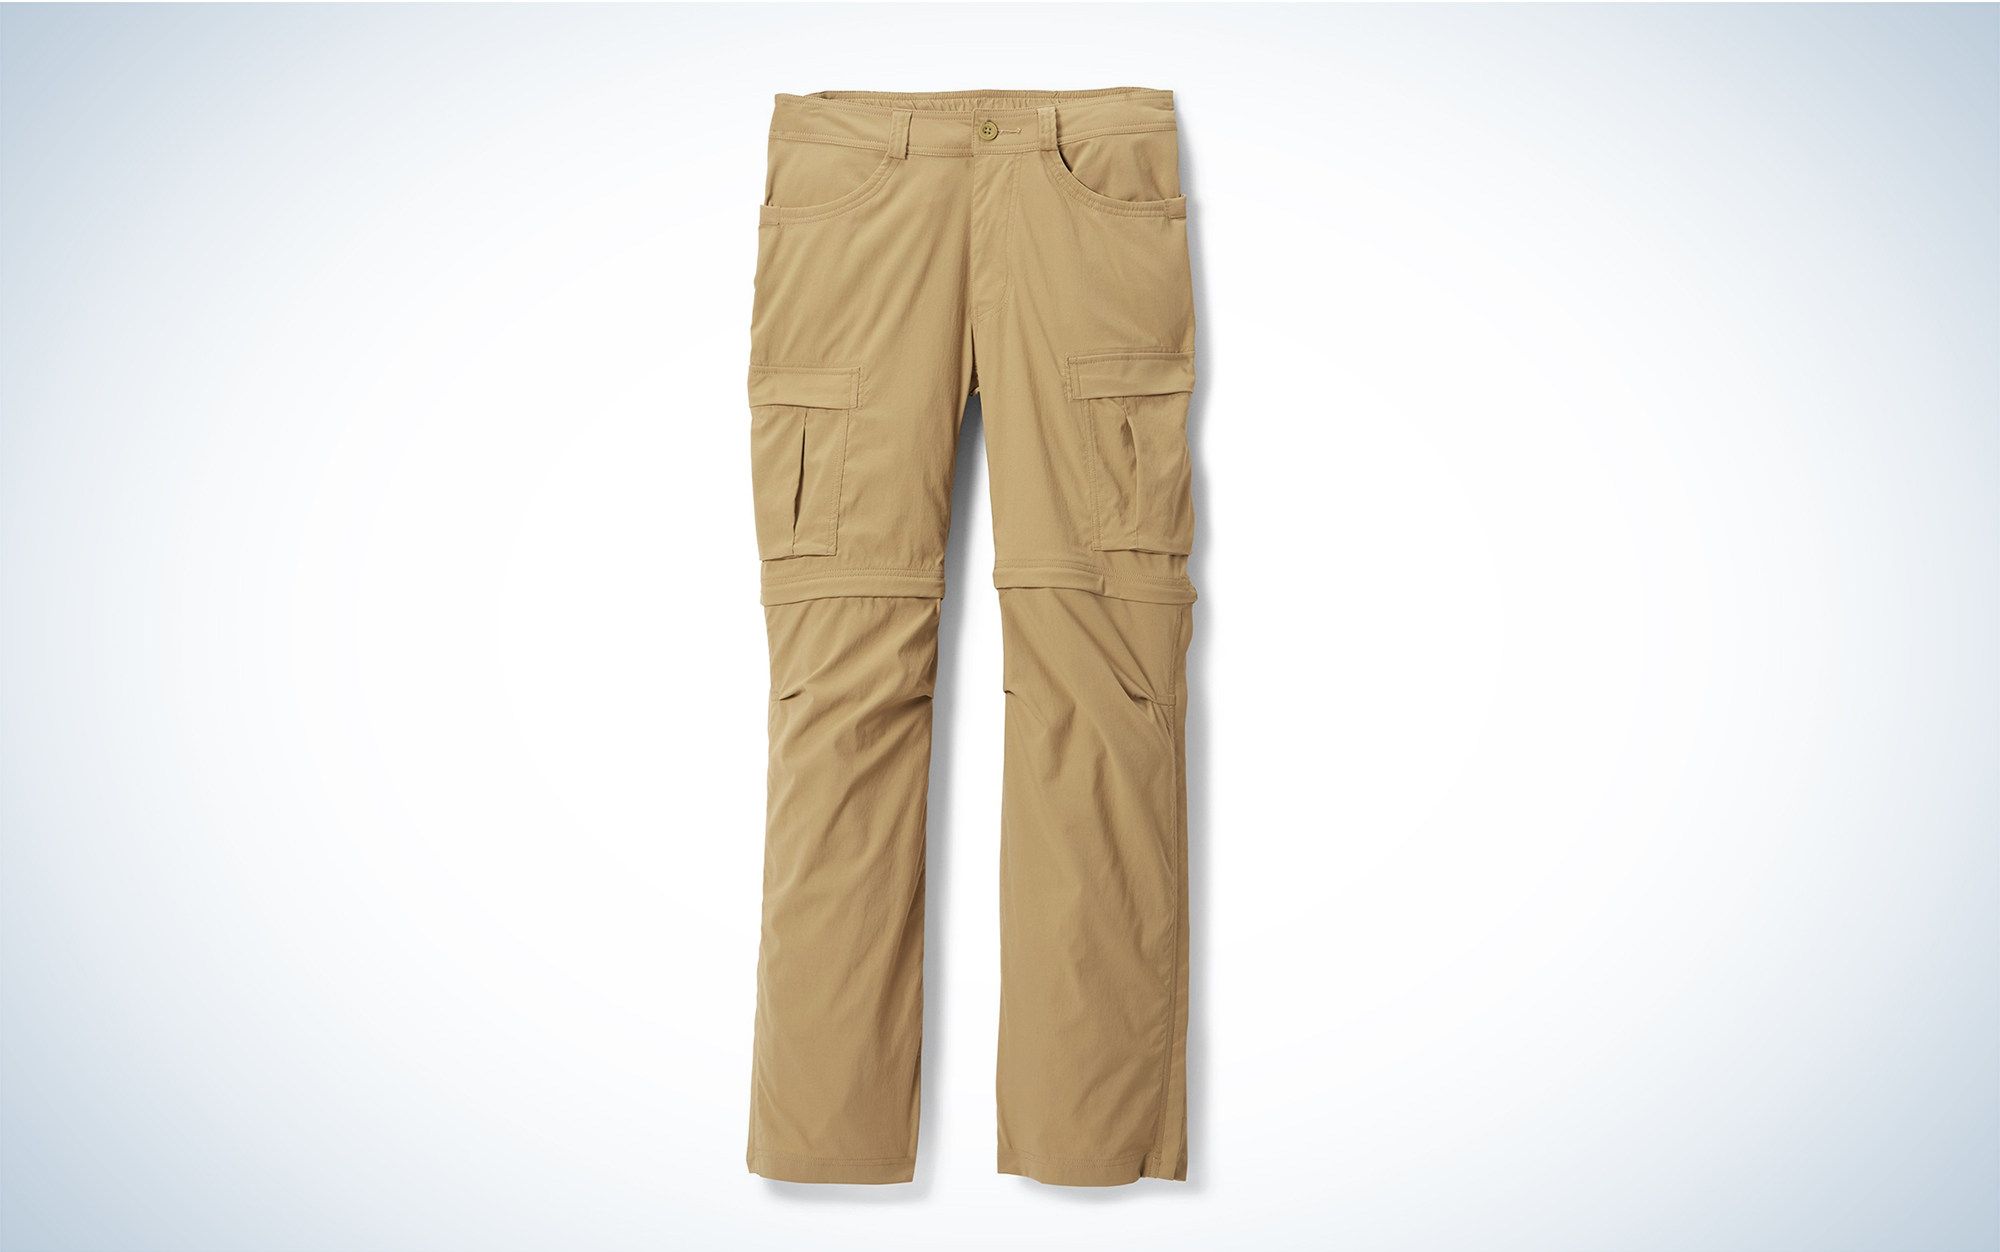 Outdoor Life Cargo Pocket Cargo Pants for Men